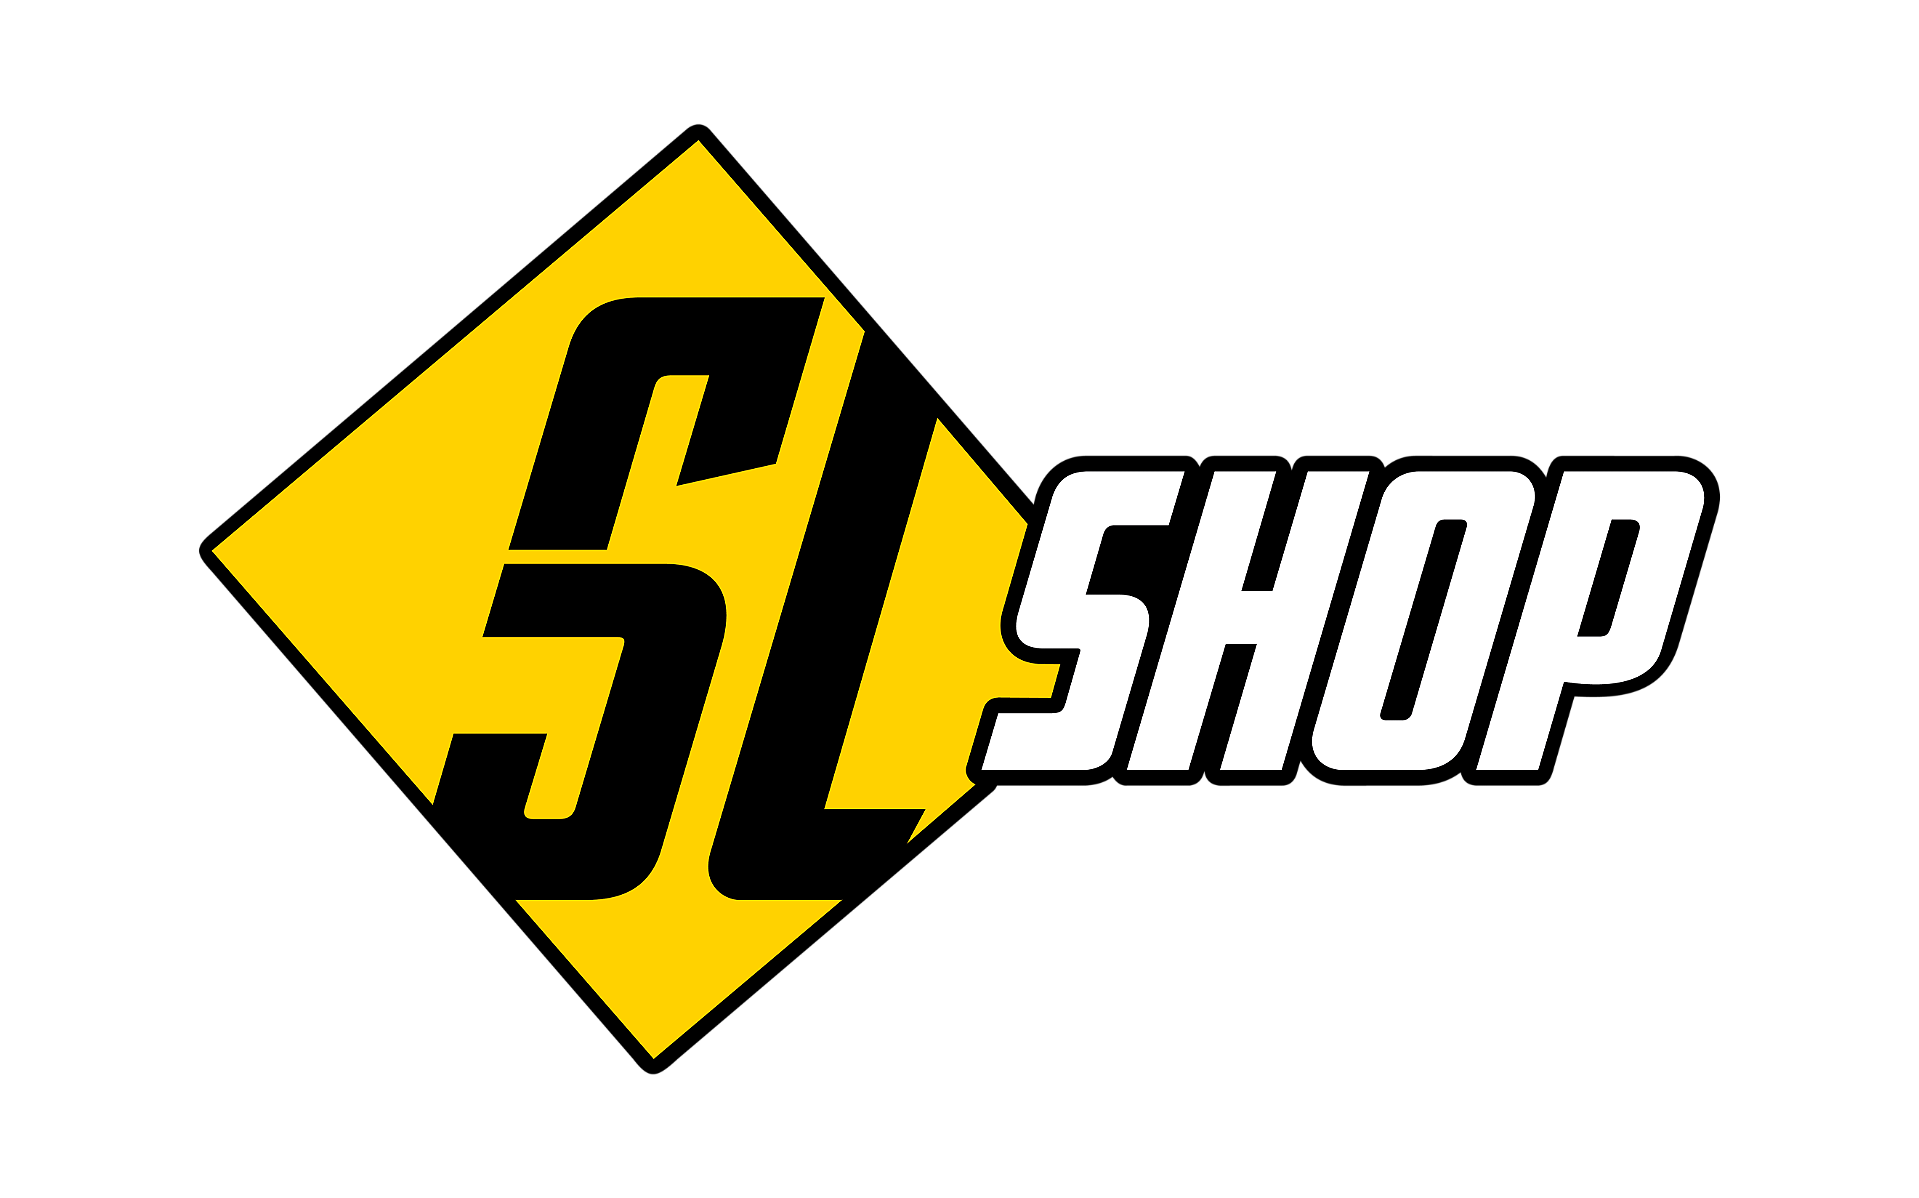 SLgameshop, Online Shop